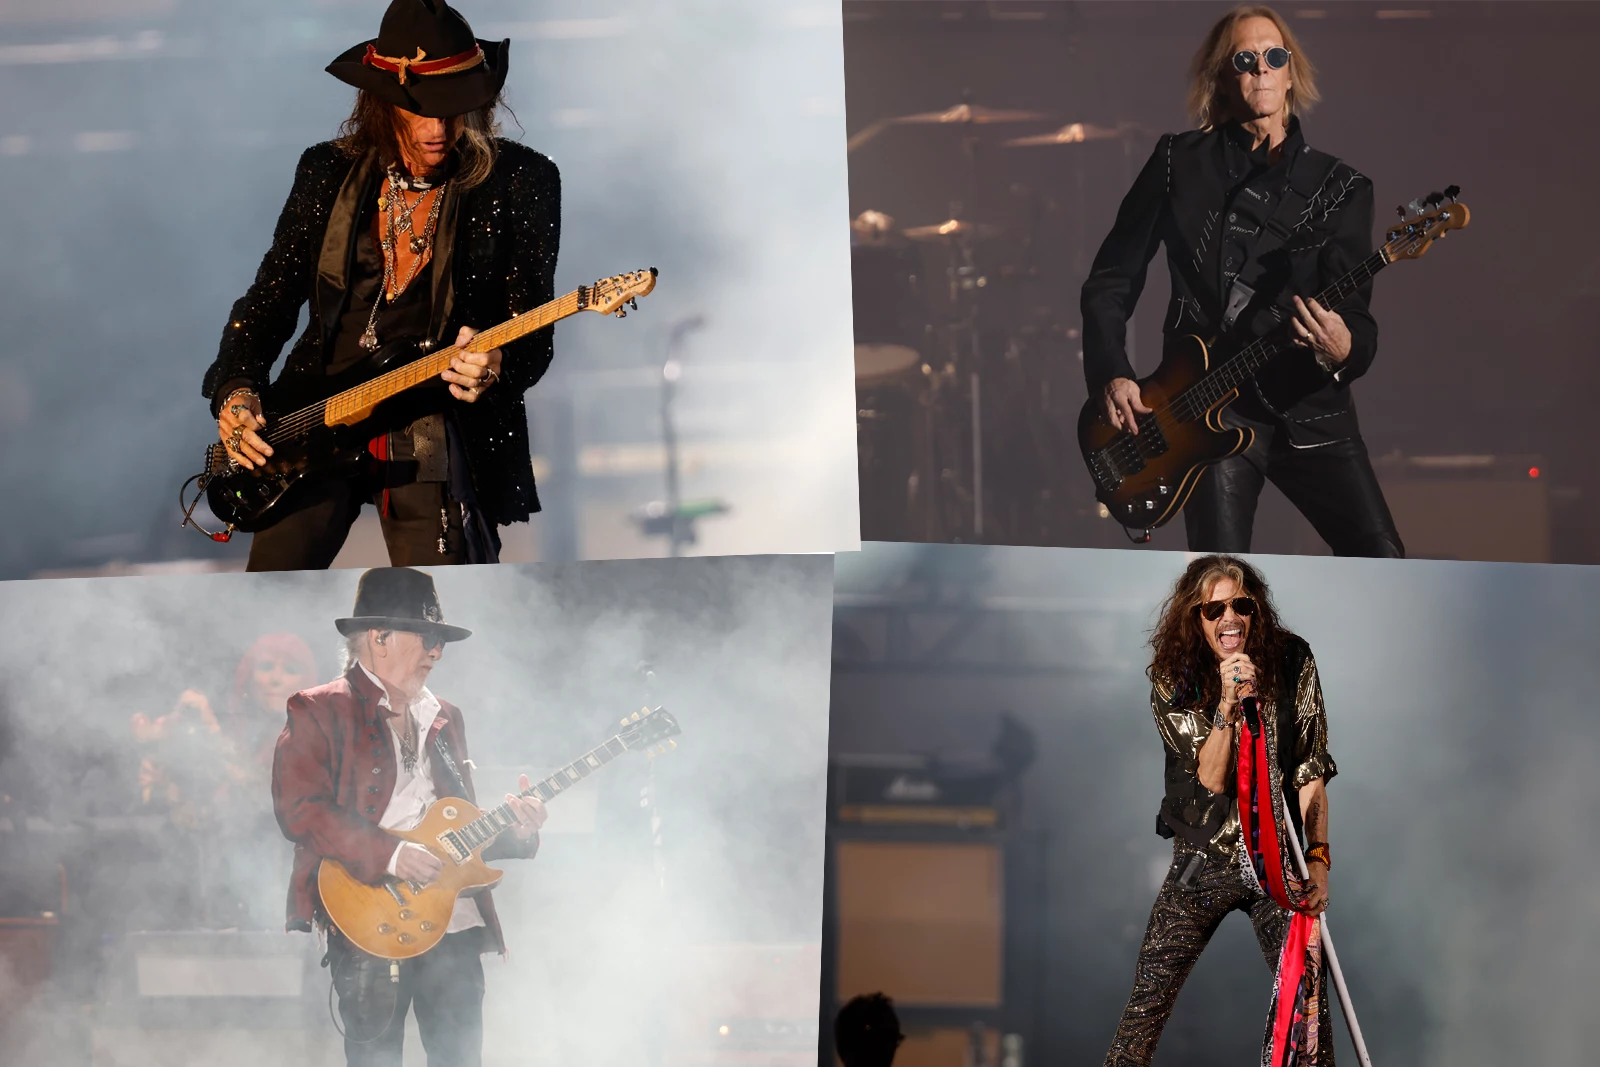 Gallery: Aerosmith rocks out in Fenway Park – Boston Herald